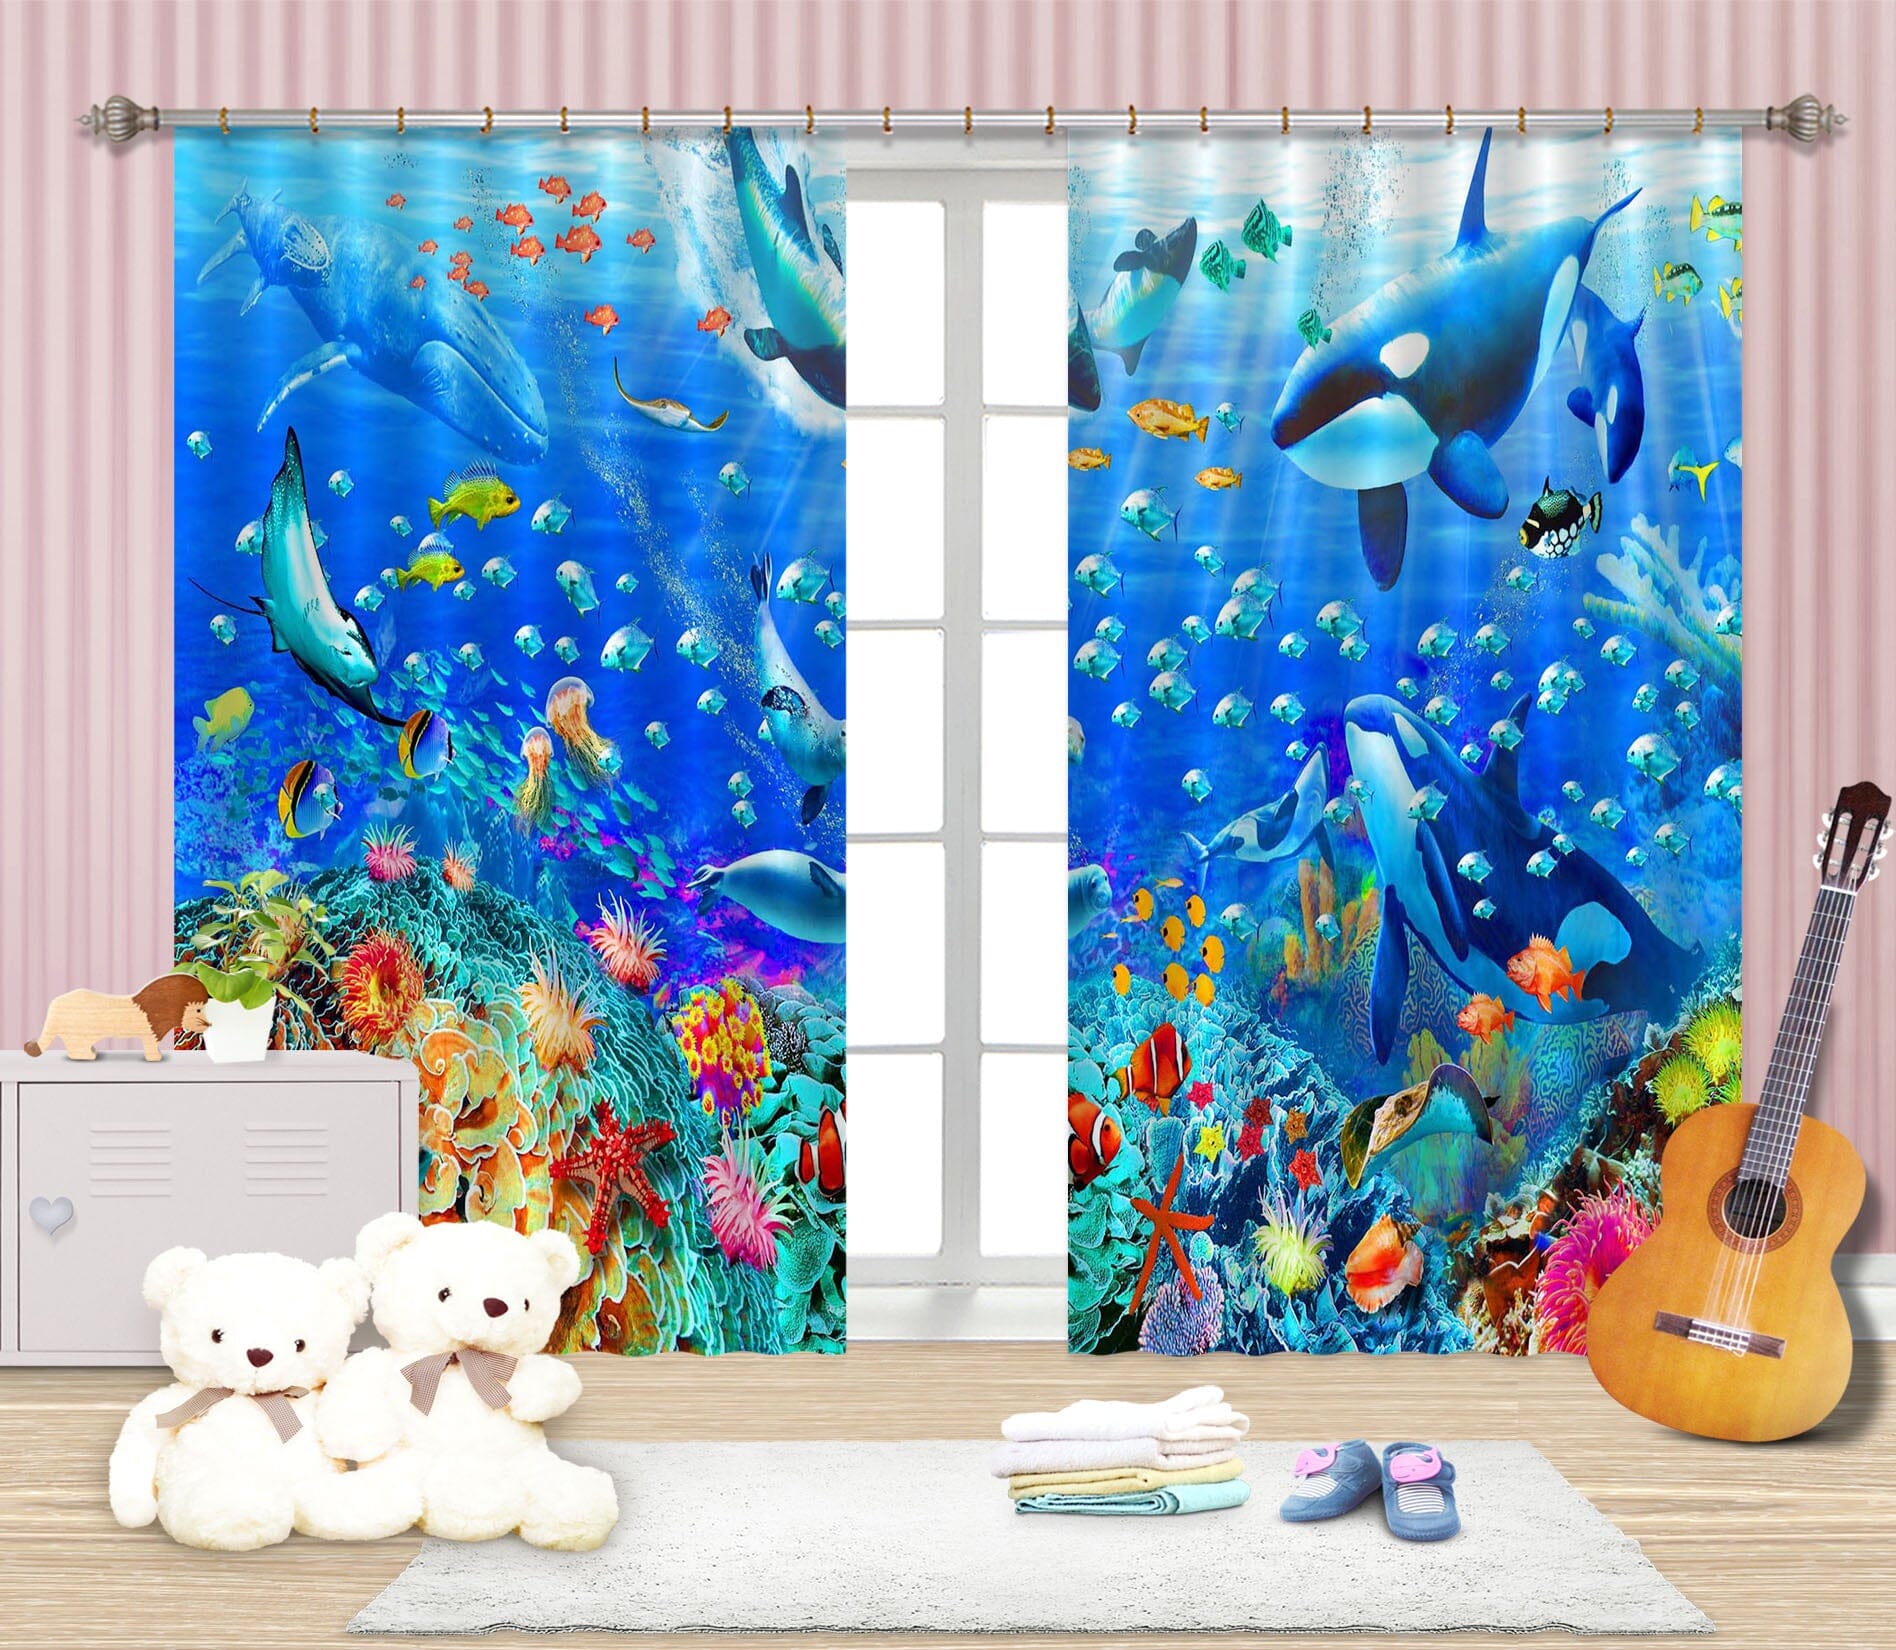 3D The Underwater World 050 Adrian Chesterman Curtain Curtains Drapes Curtains AJ Creativity Home 